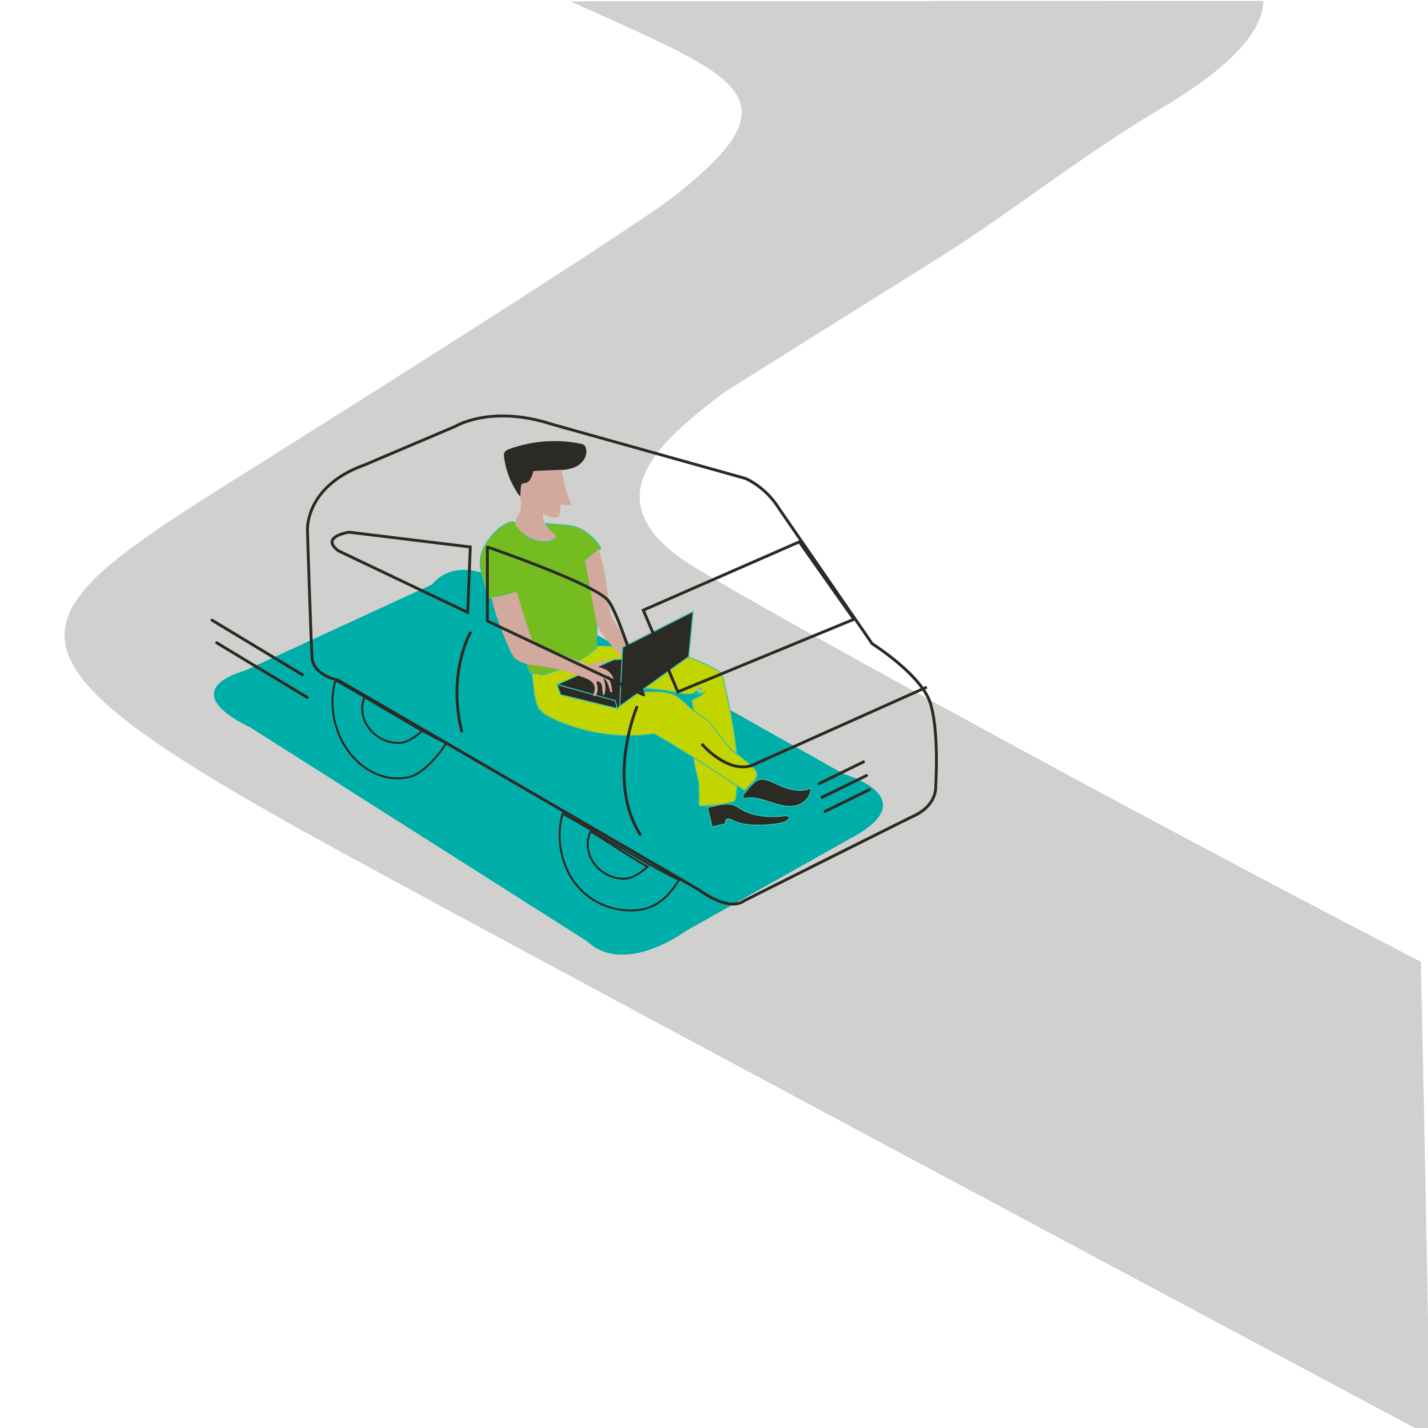 Future Driverless Vehicle pre-event illustration